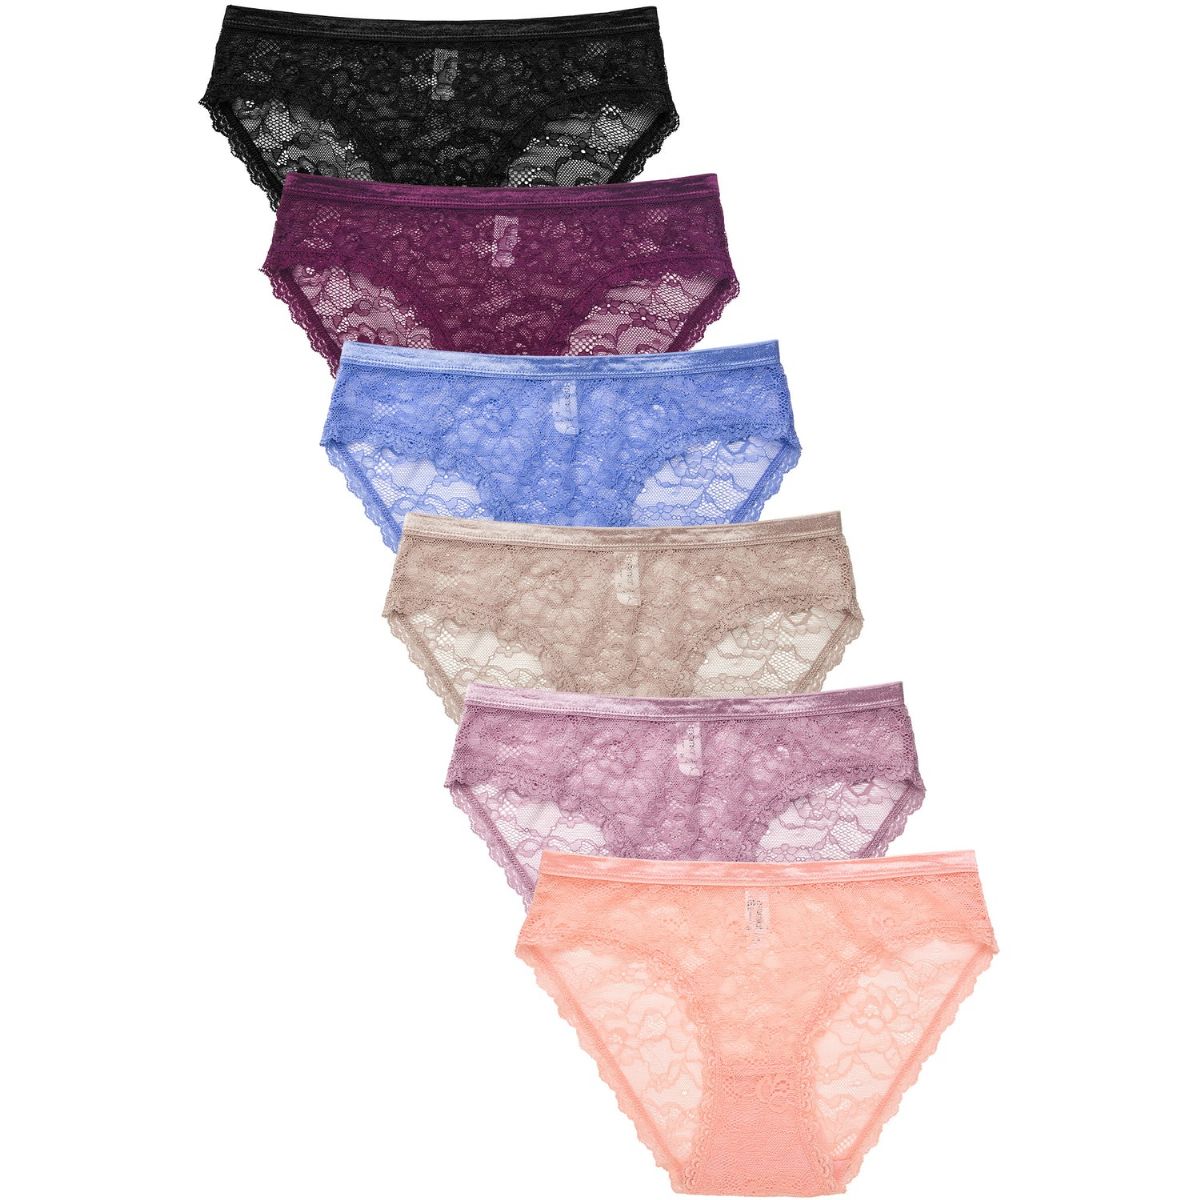 432 Pieces of Mamia Ladies Lace Bikini Panties Assorted Sizes S-xl